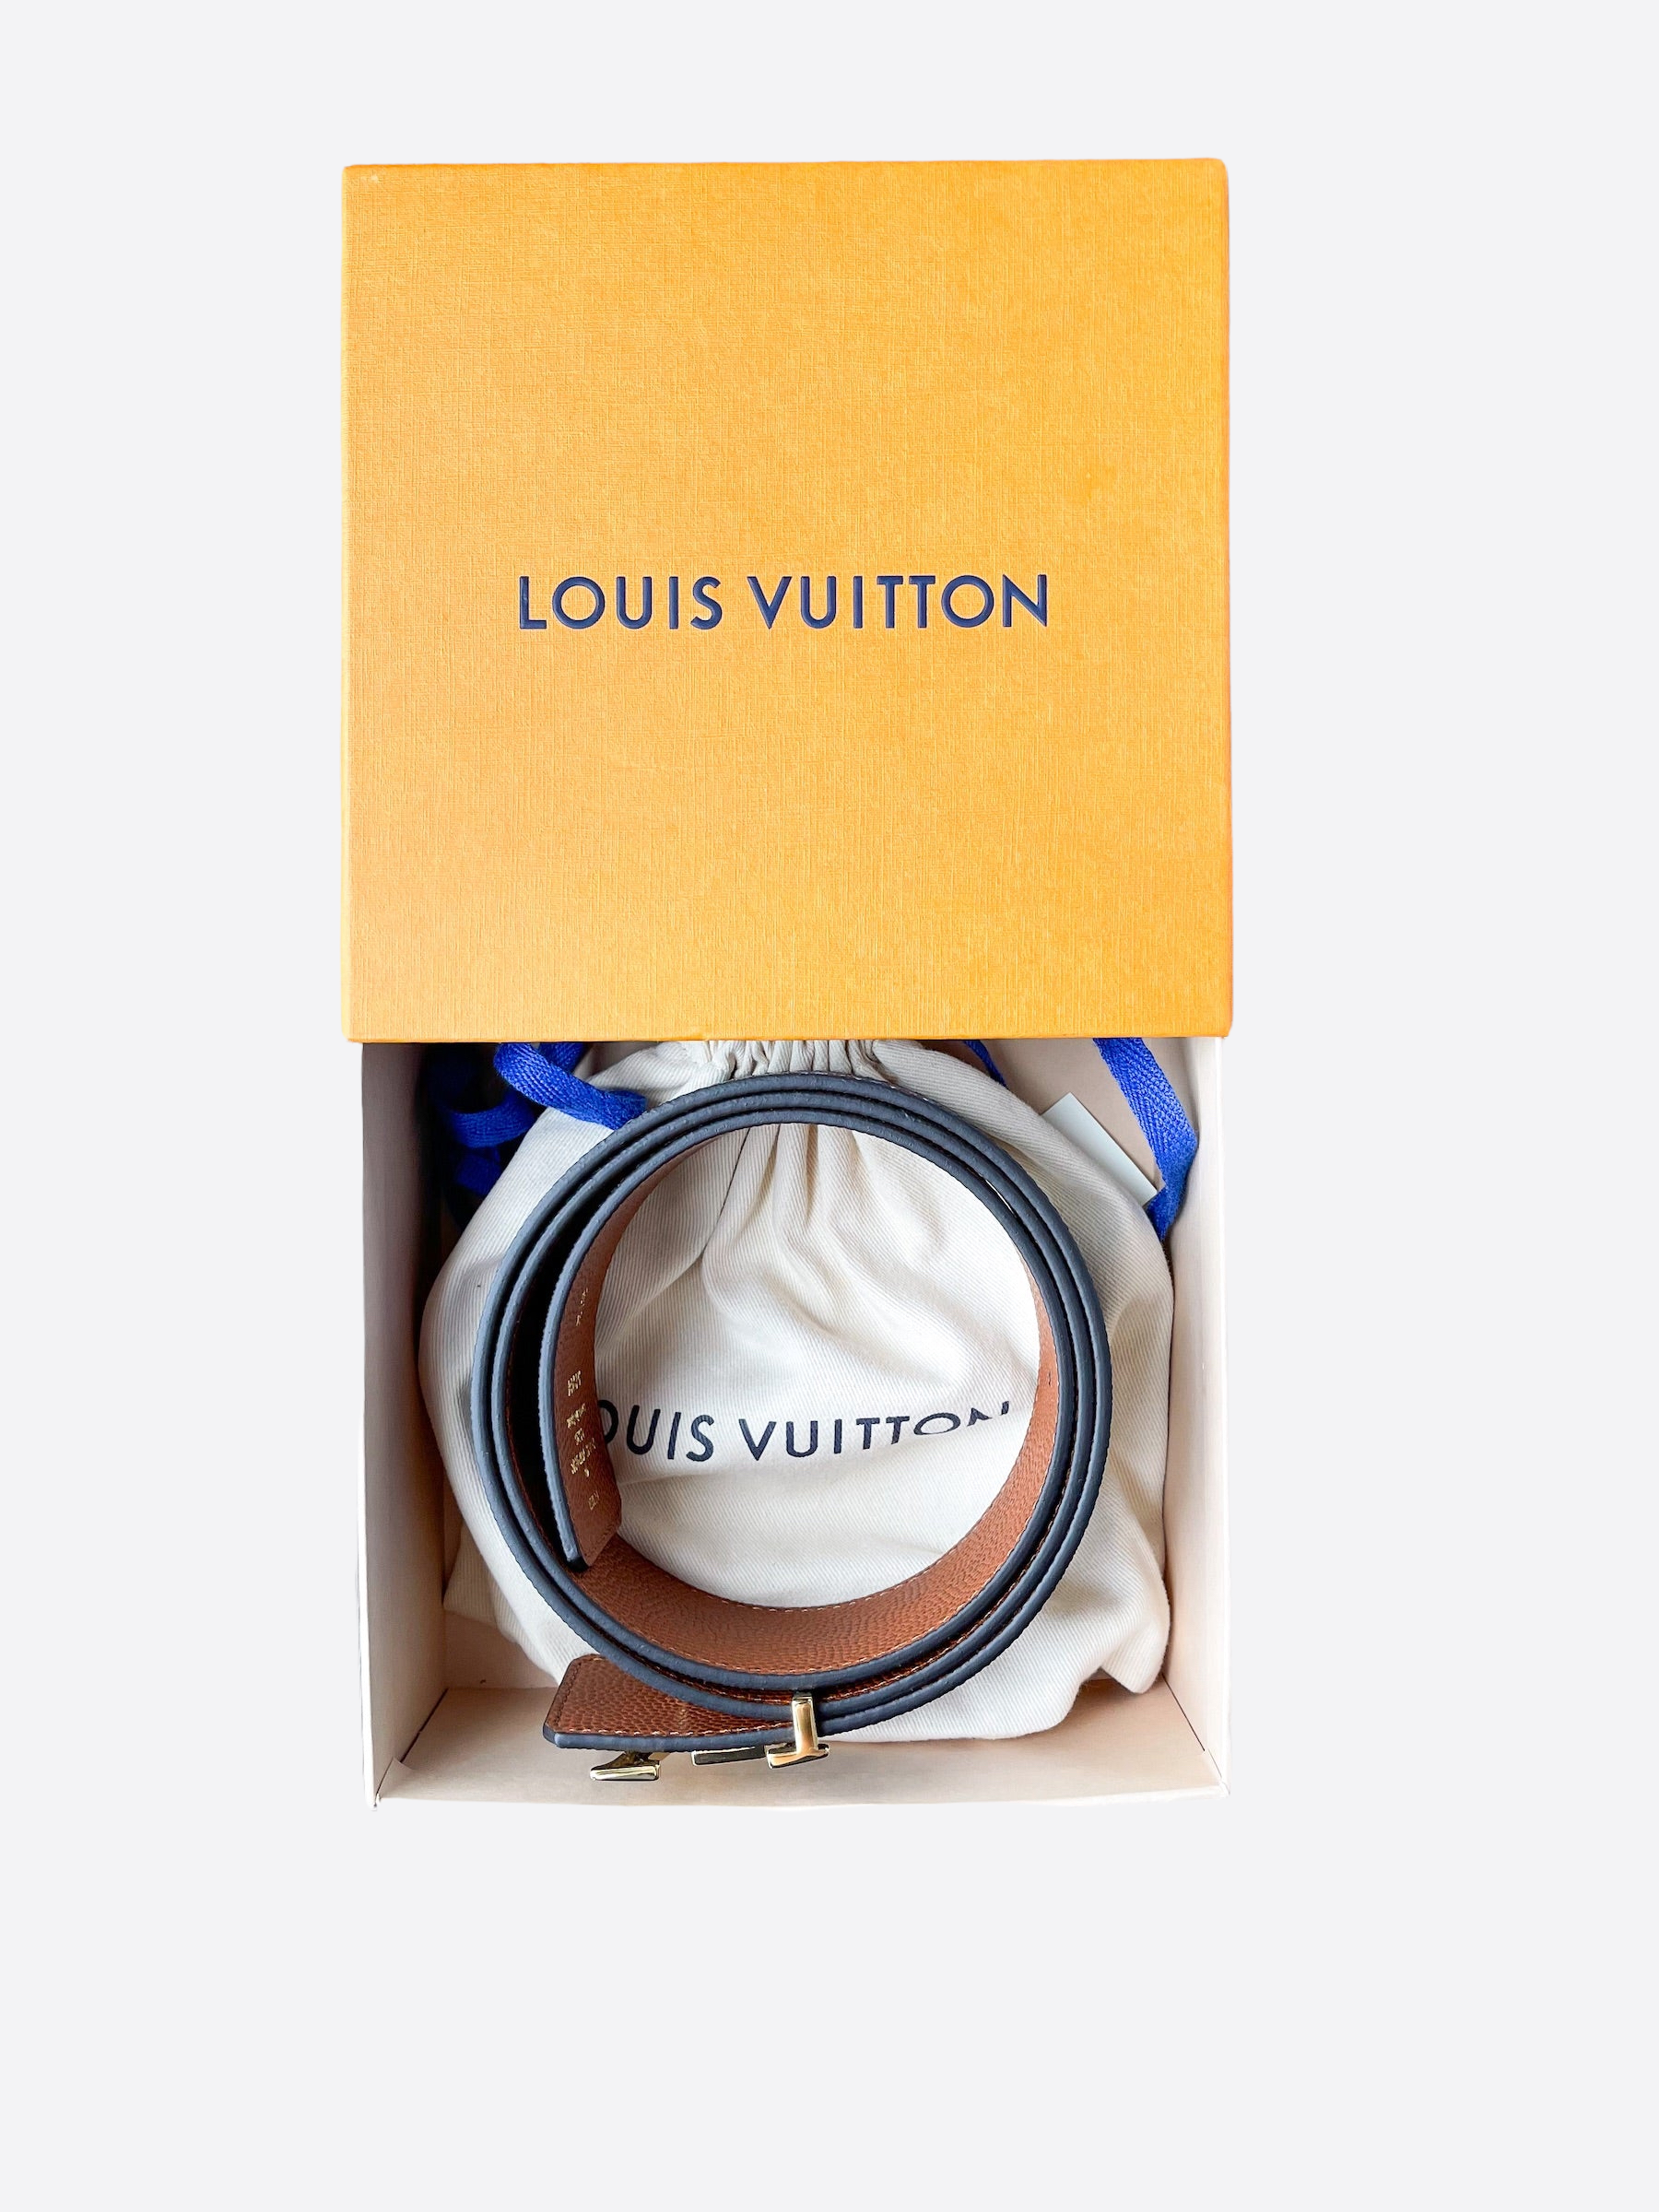 Louis Vuitton LVXNBA Knit Jacket